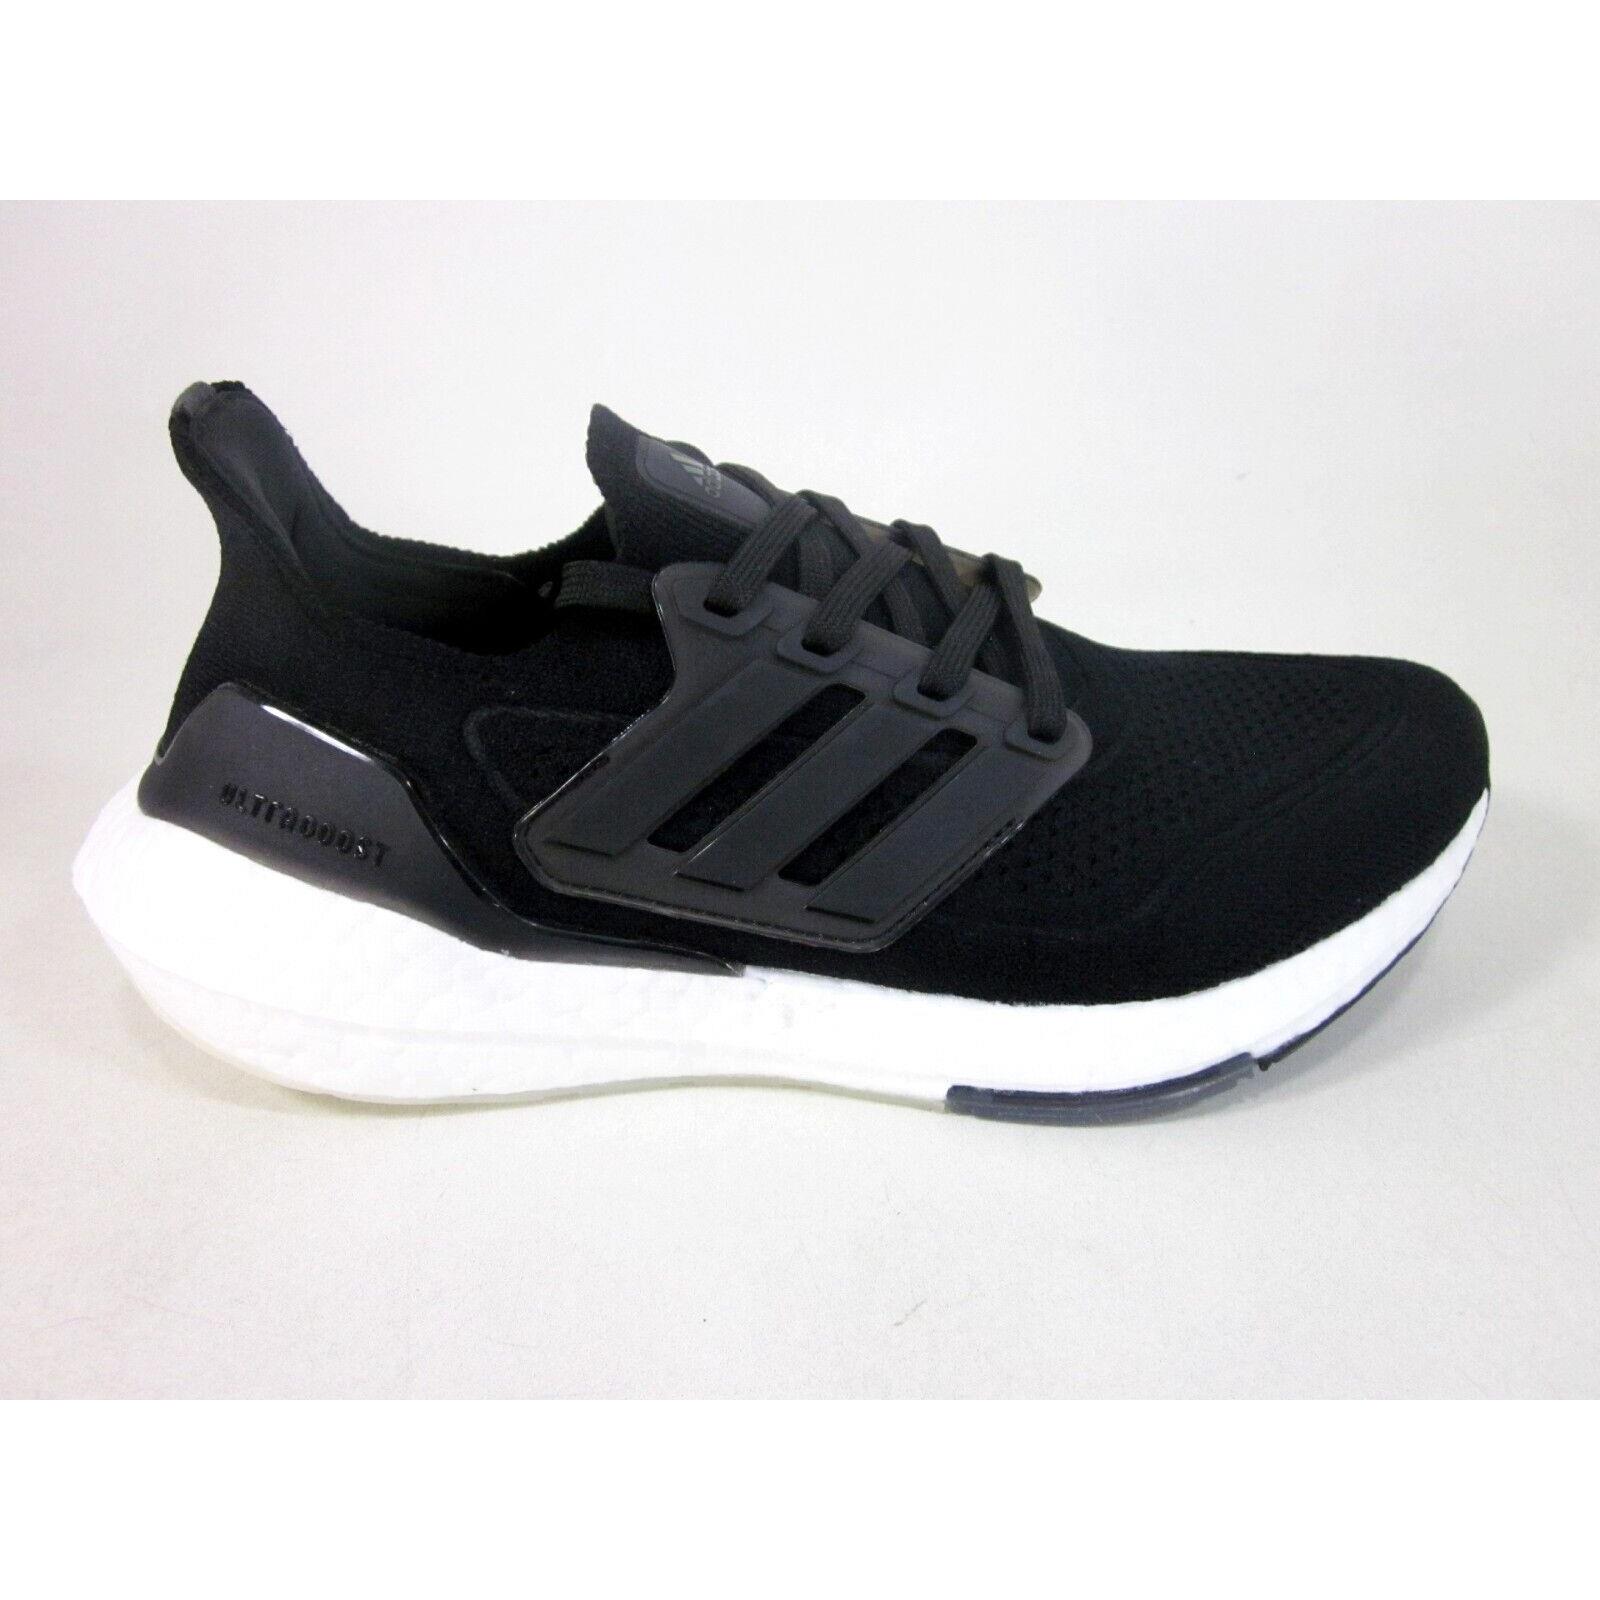 Adidas shoes Ultraboost - Black/Grey/White 0